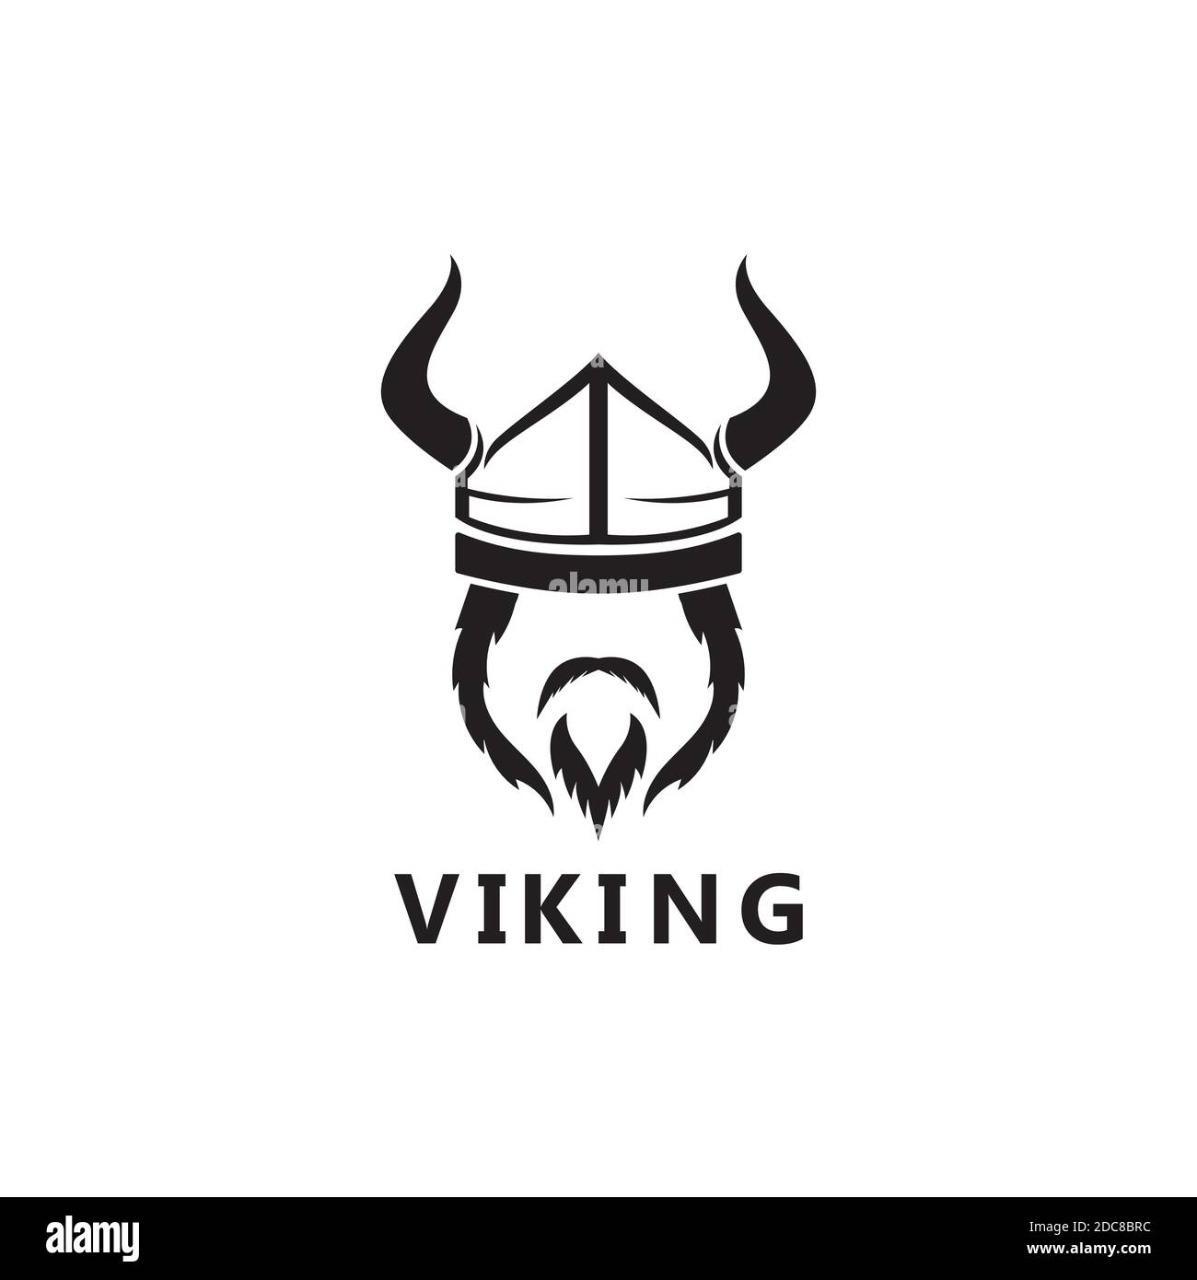 Vikingo95?s=x+rhuibgic2dfcqddqdewpitrvg6n5ailks17rui7bw=